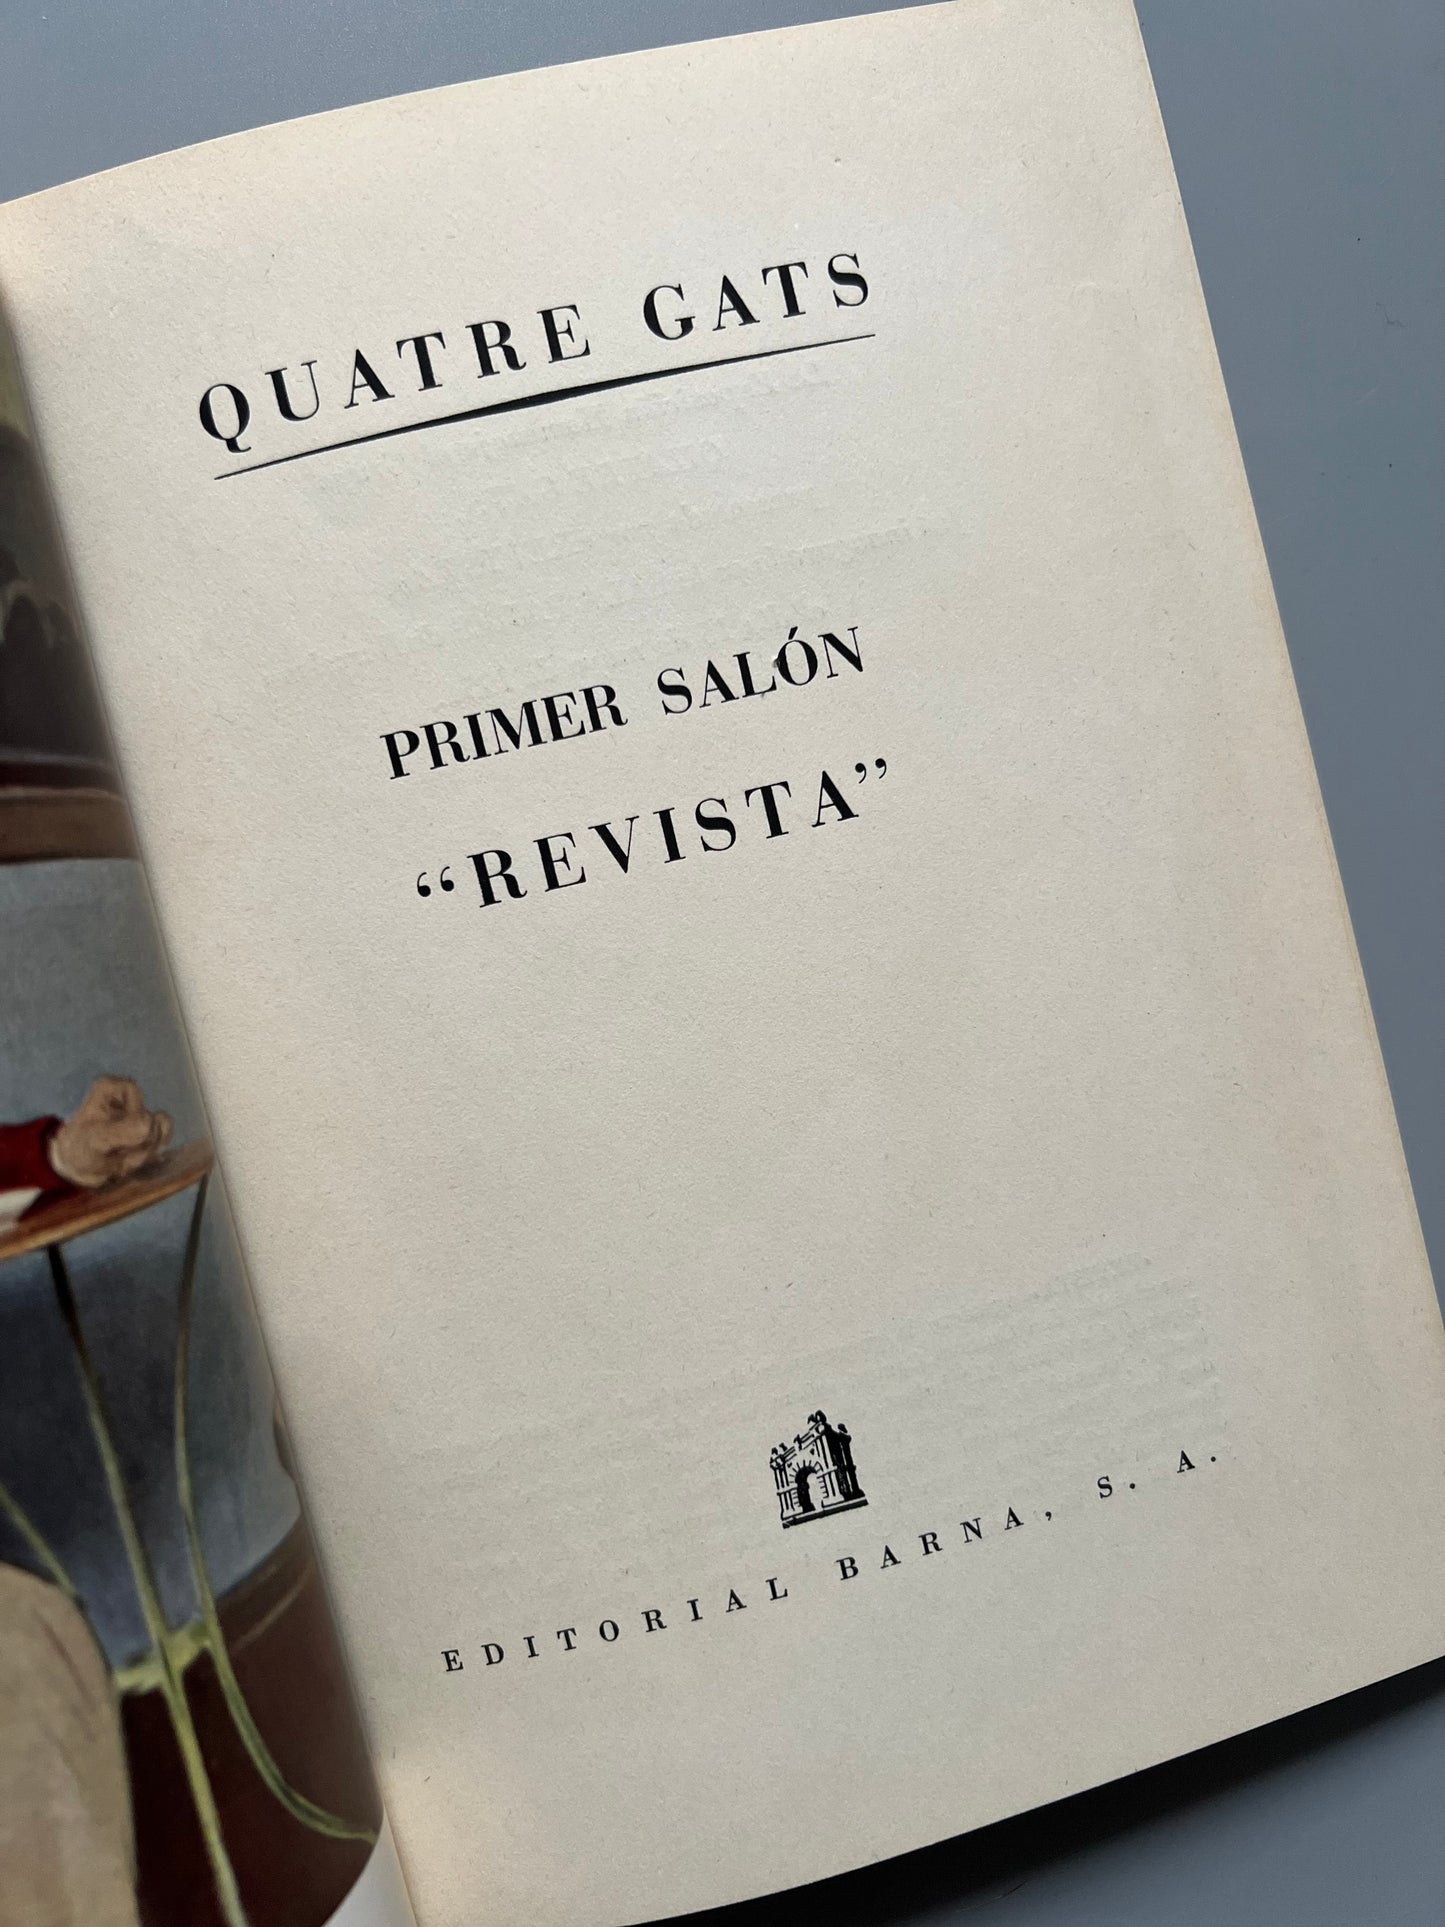 Exposición homenaje al grupo Quatre Gats - Editorial Barna, 1954